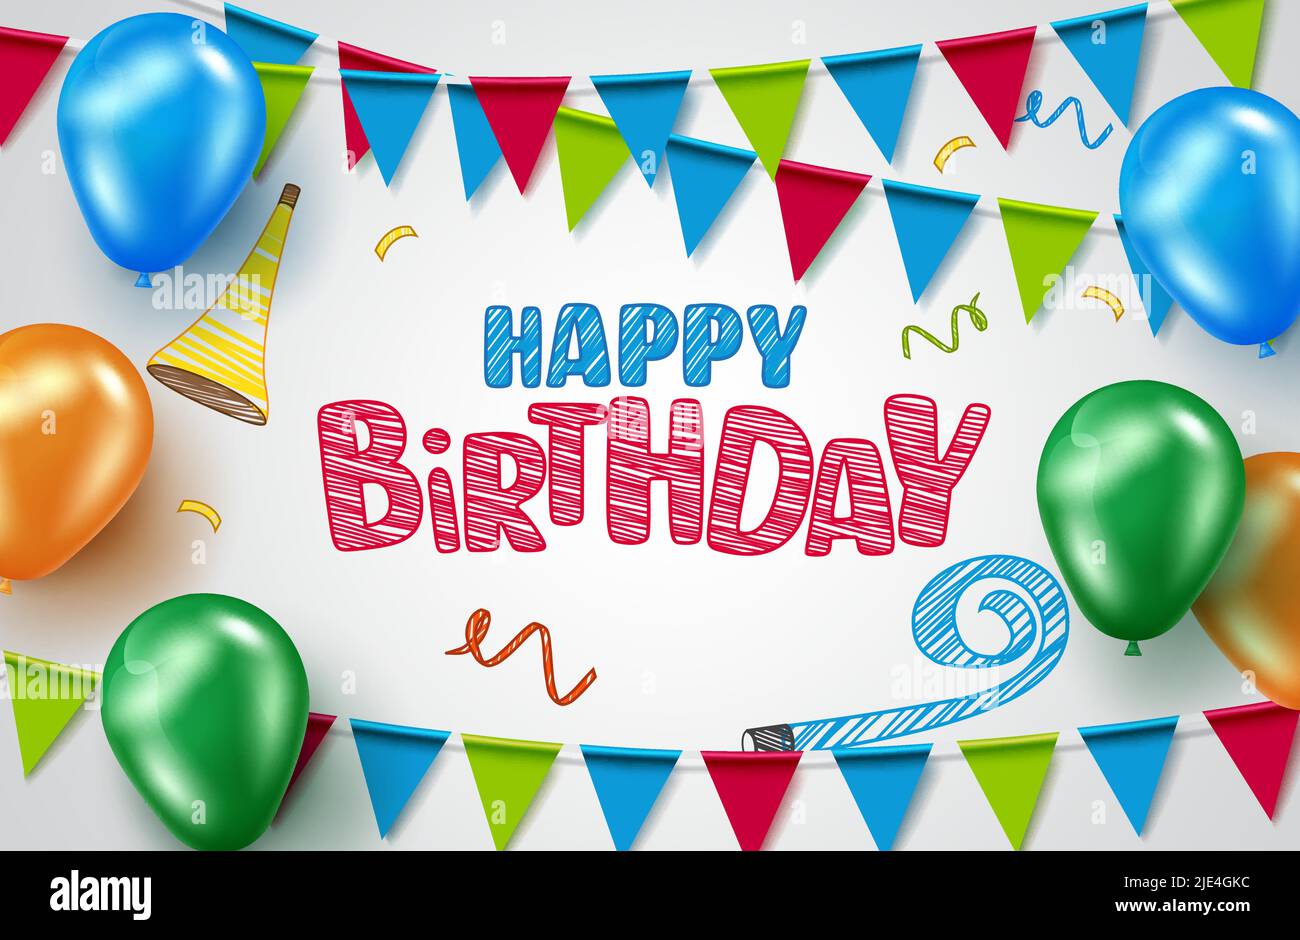 Birthday greeting vector background design. Happy birthday text in ...